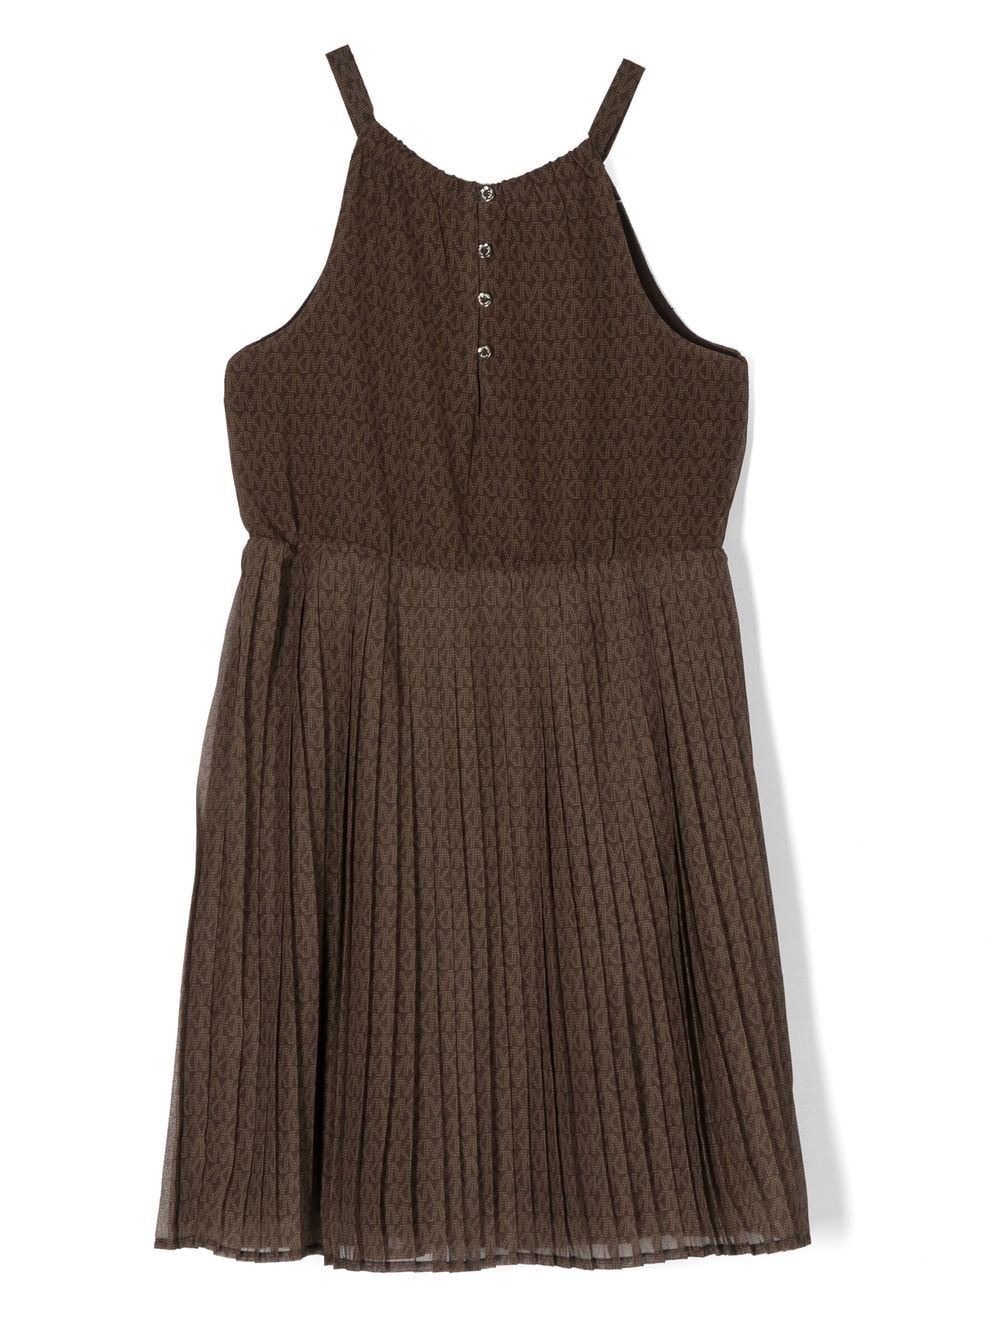 Brown dress for girls